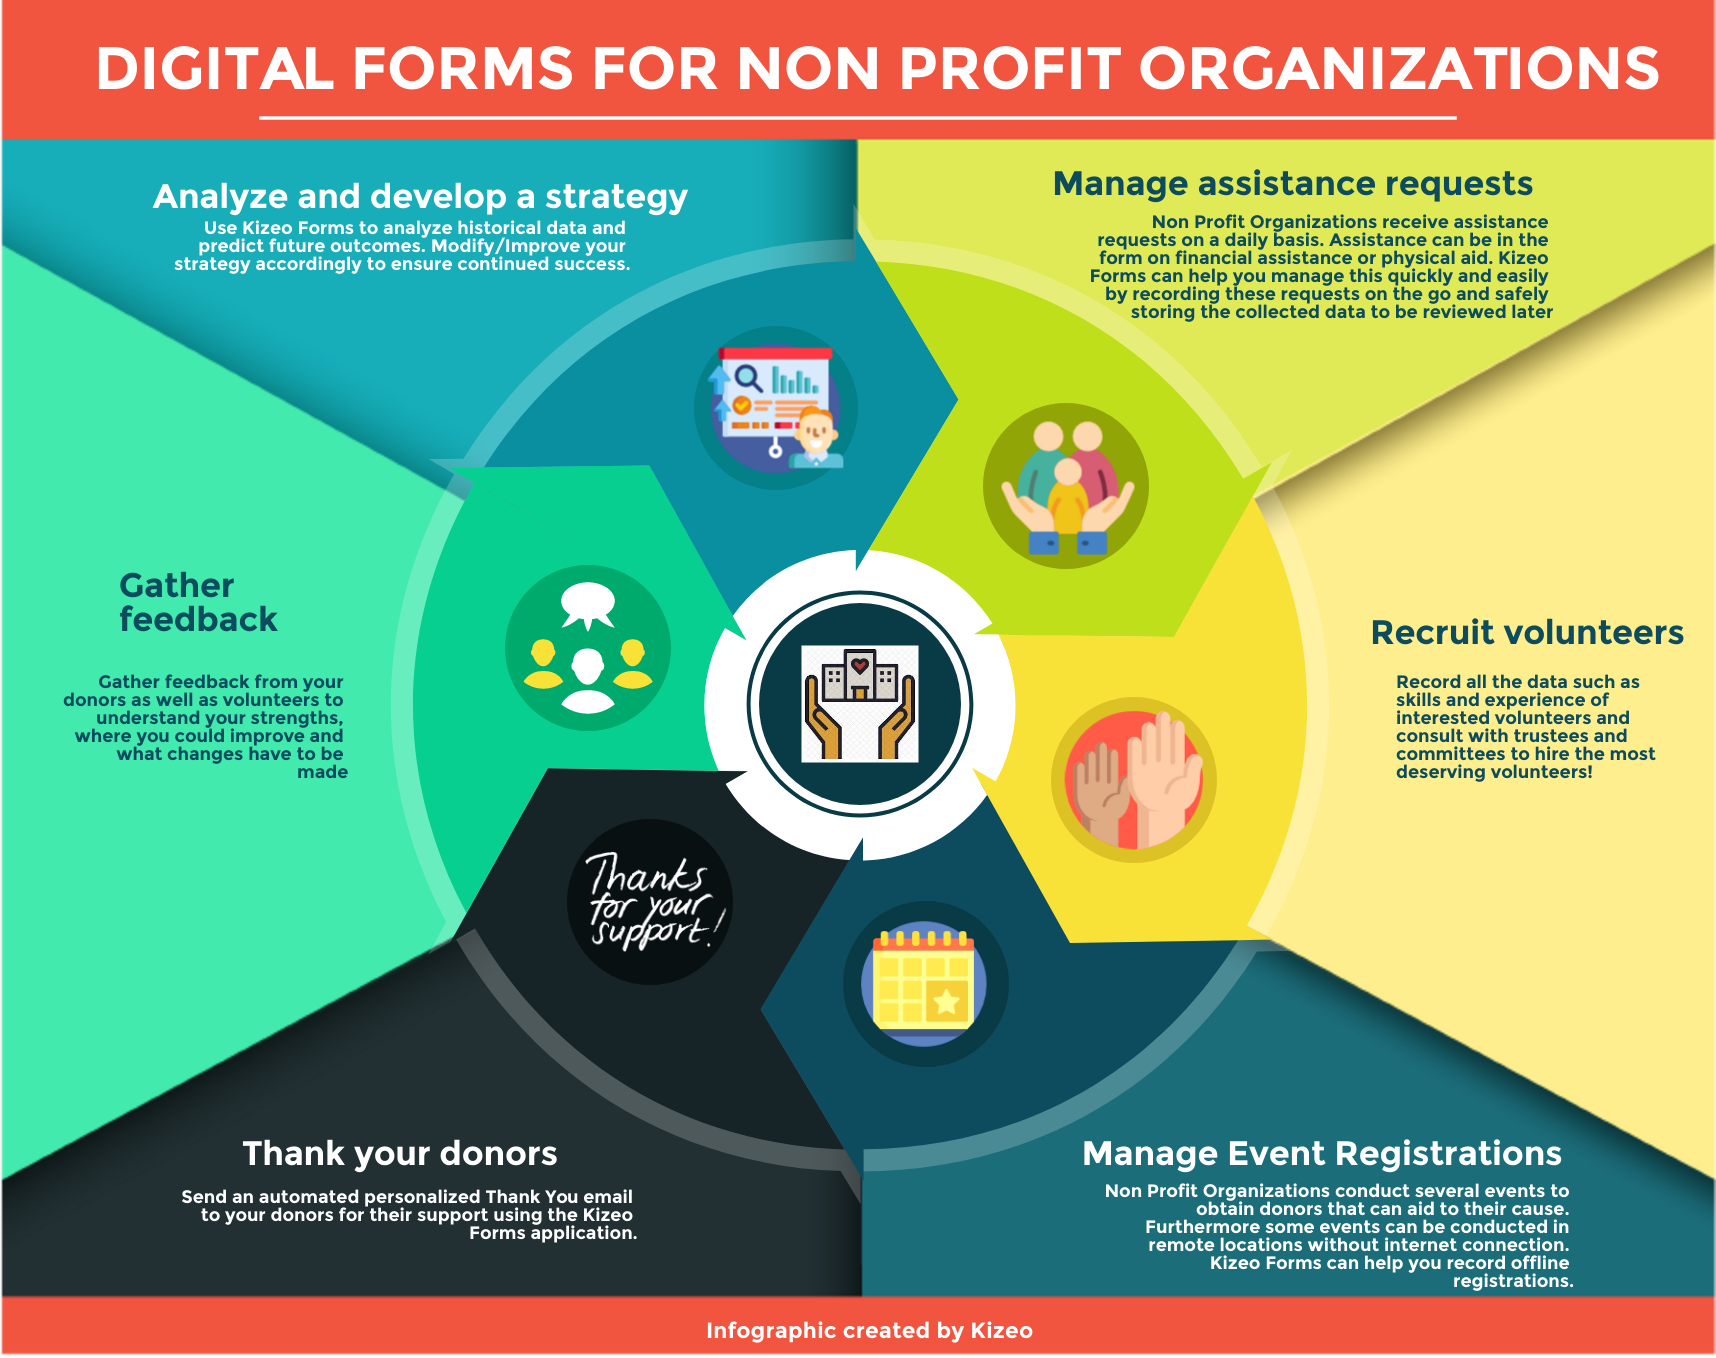 Digital Forms for Non Profit